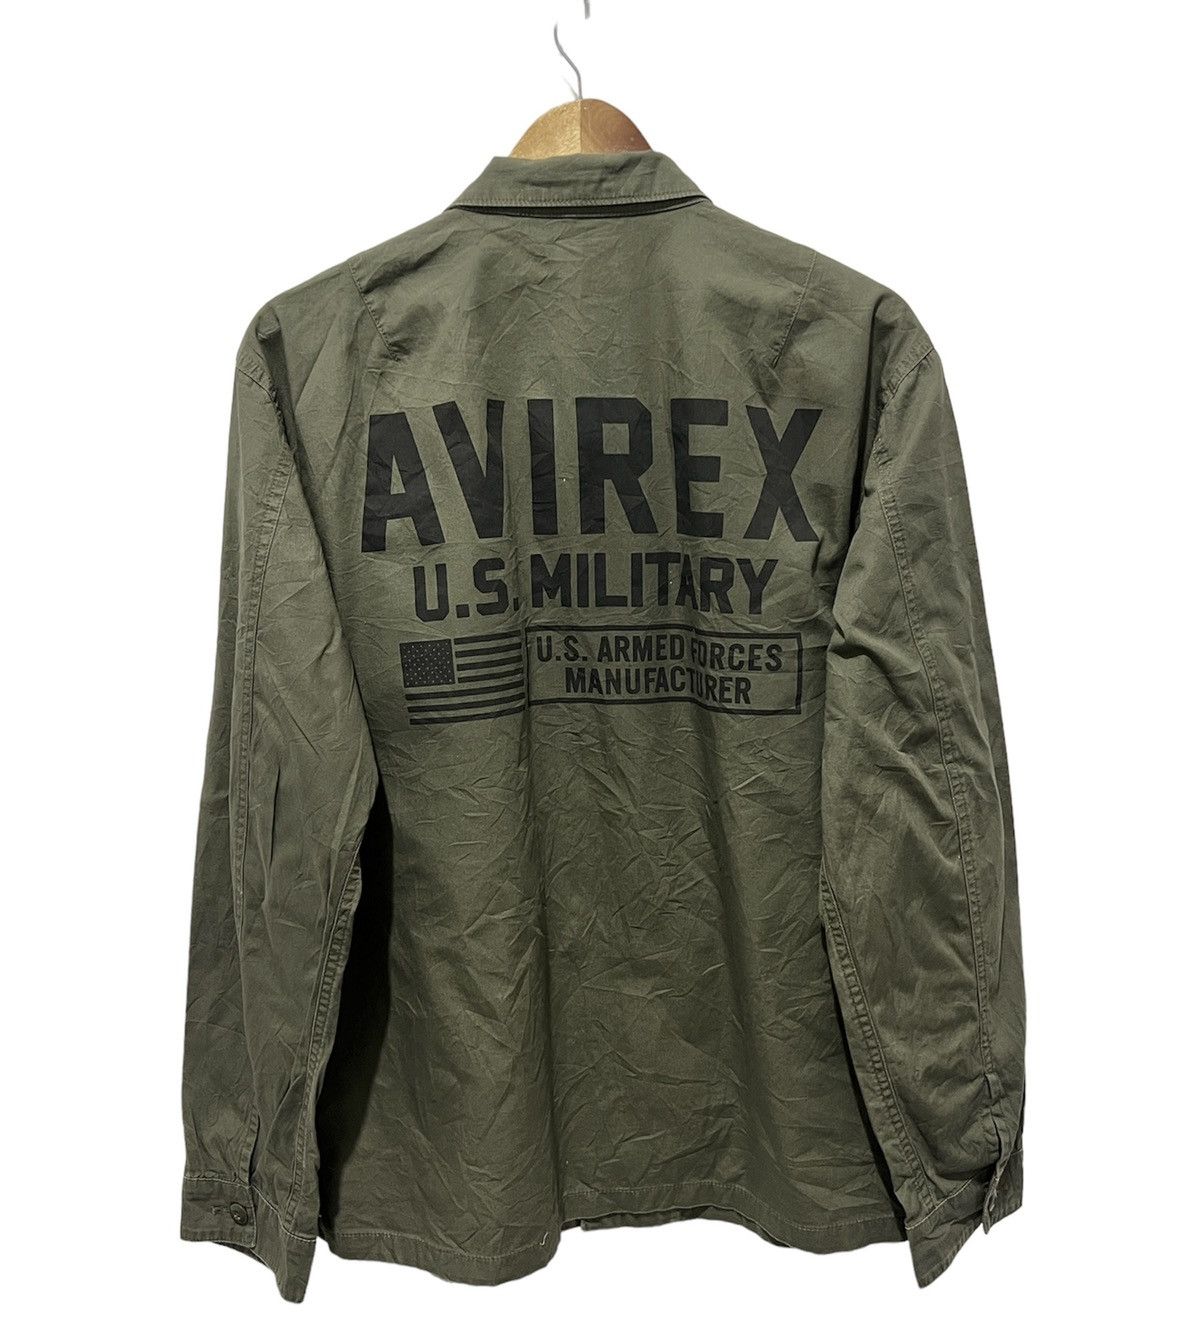 Avirex Avirex US Military Forces Jacket | Grailed